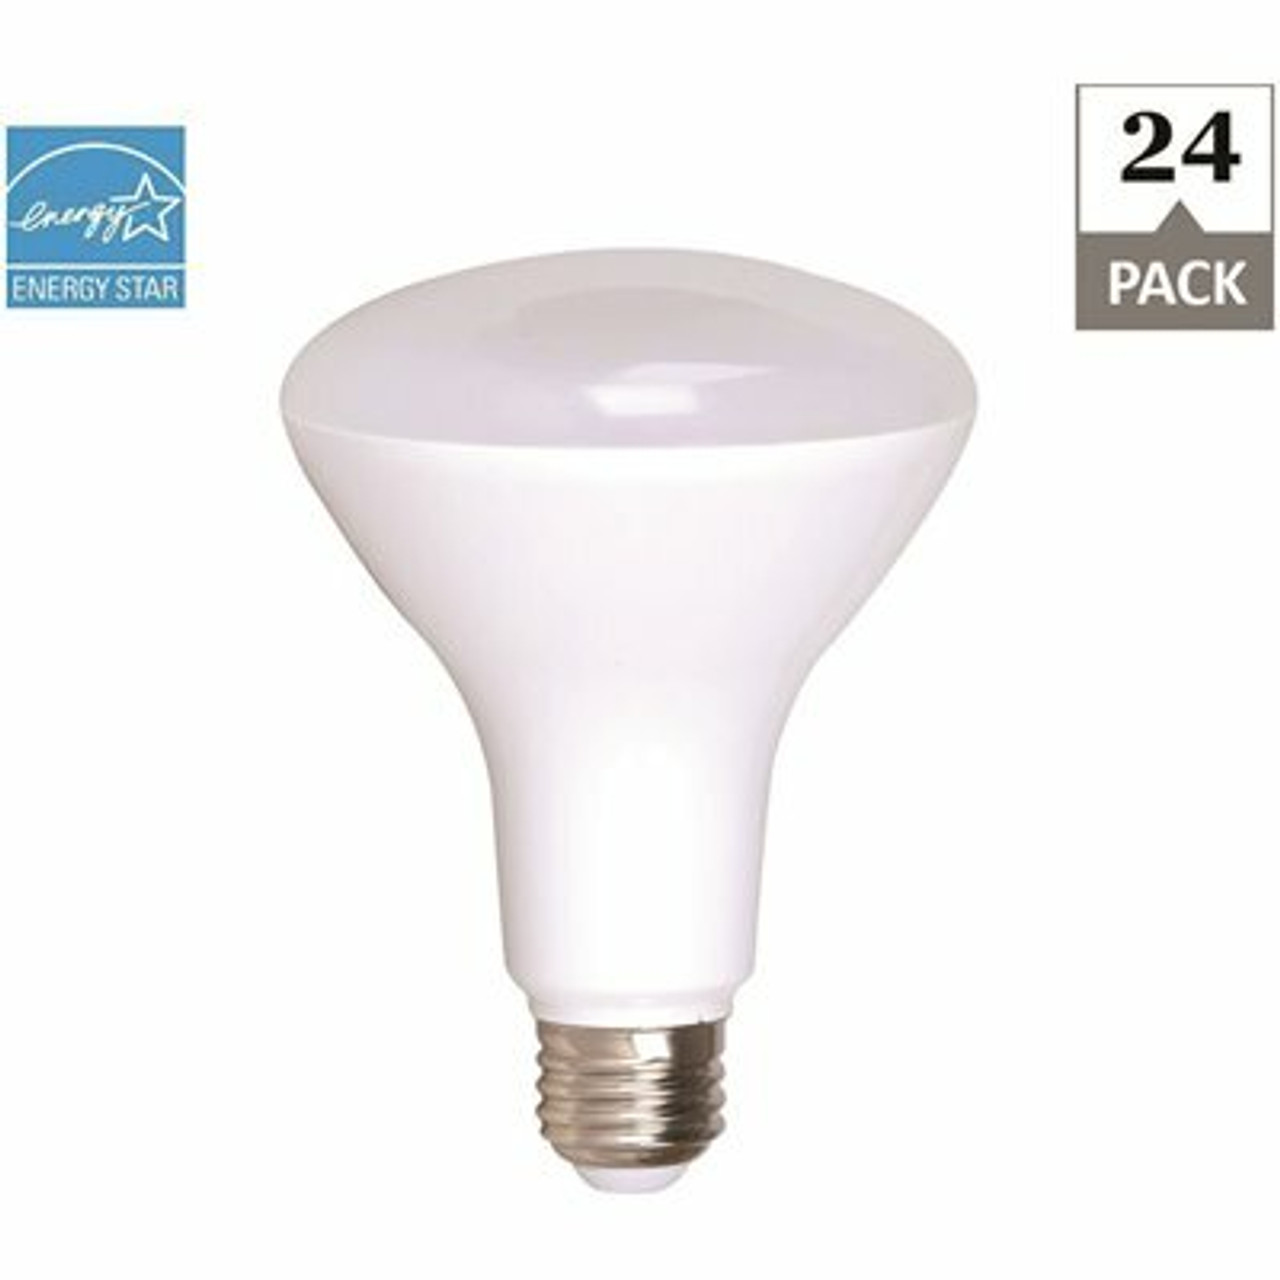 65-Watt Equivalent Br30 Dimmable Cec Title 24 Compliant Energy Star 90 Plus Cri Led Light Bulb Warm White (24-Pack)